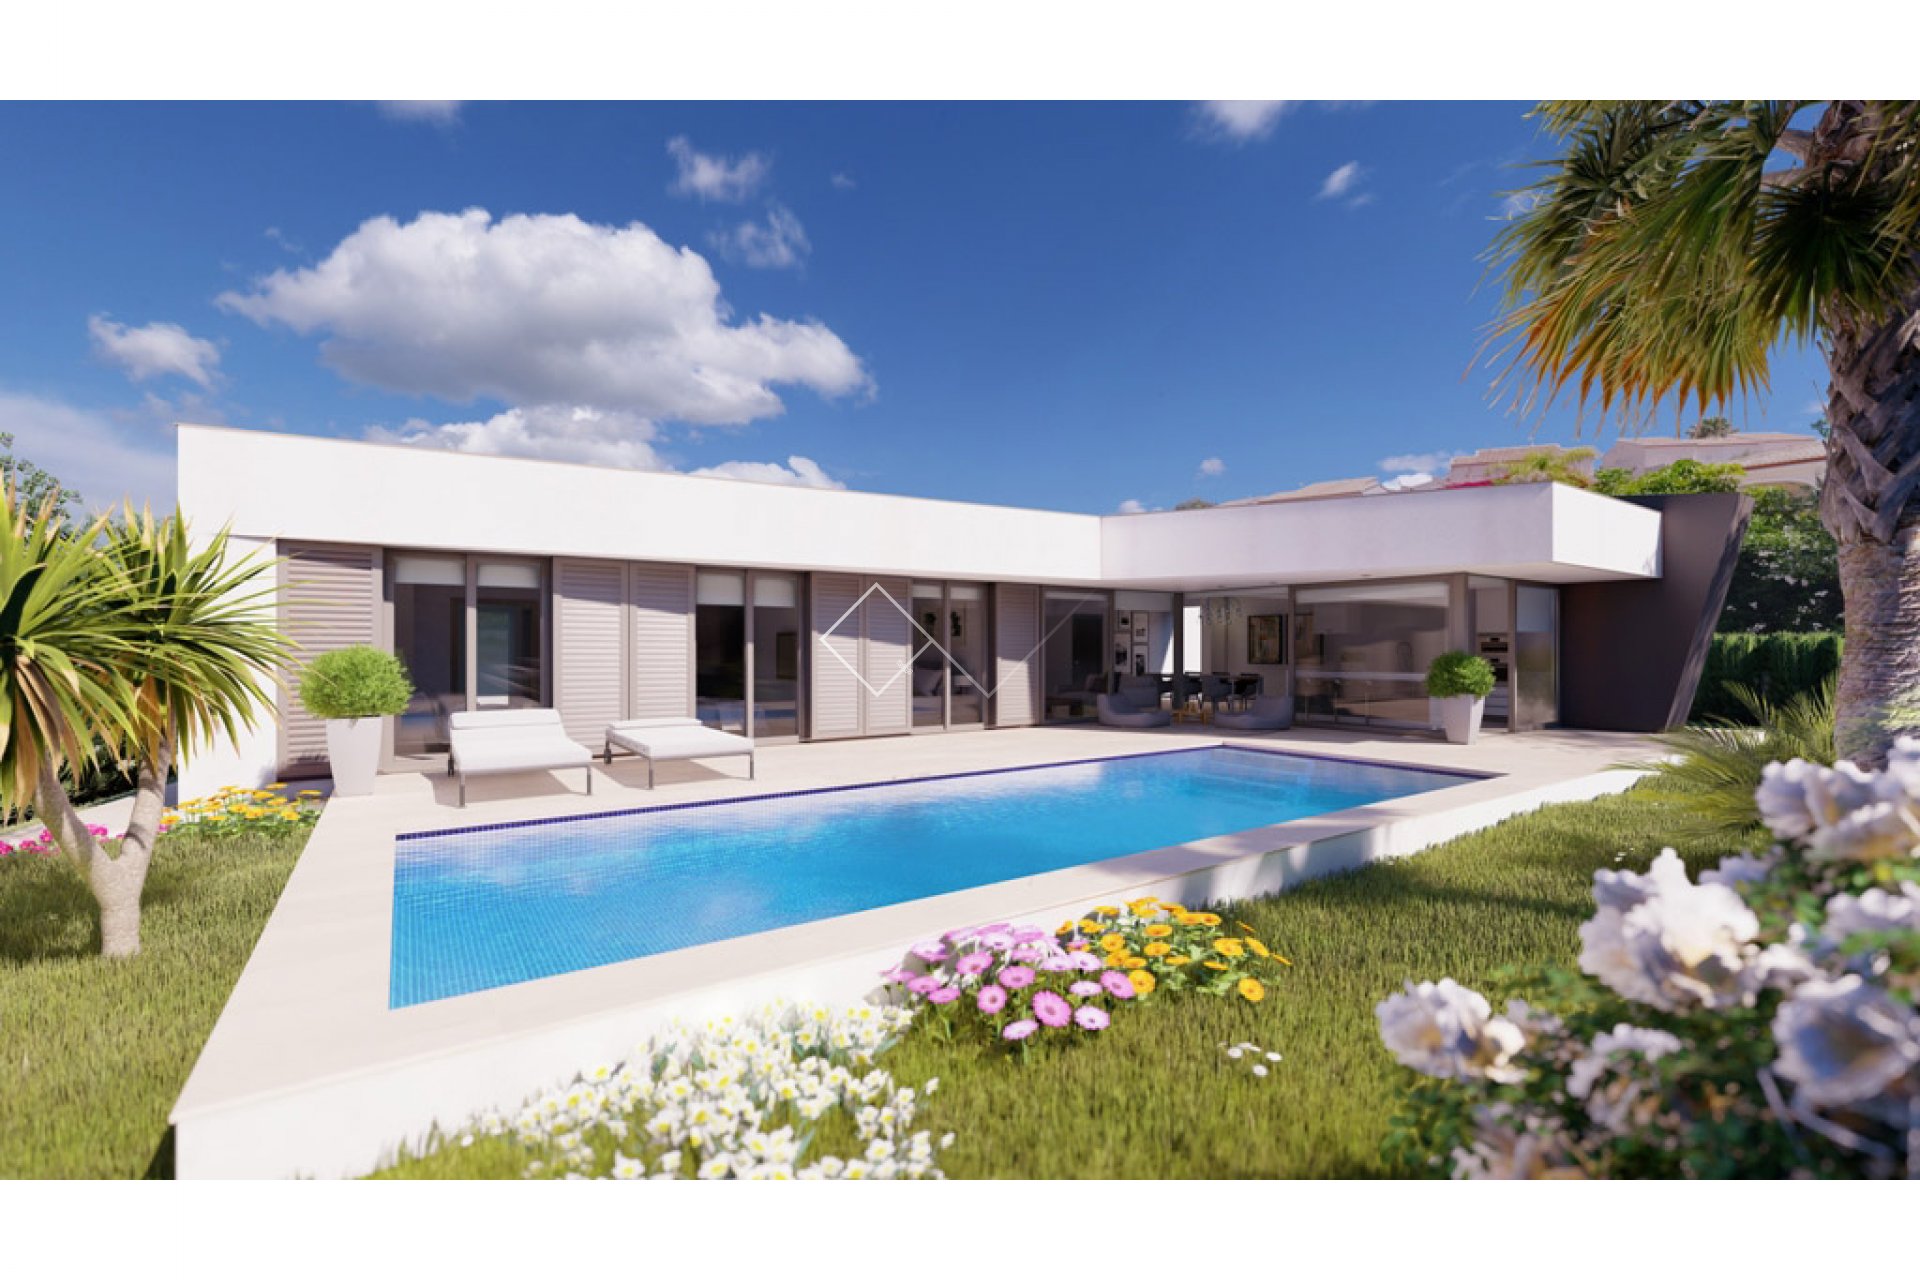 Villa de estilo ibicenco con piscina - Proyecto de casa moderna en Gran Sol, Calpe